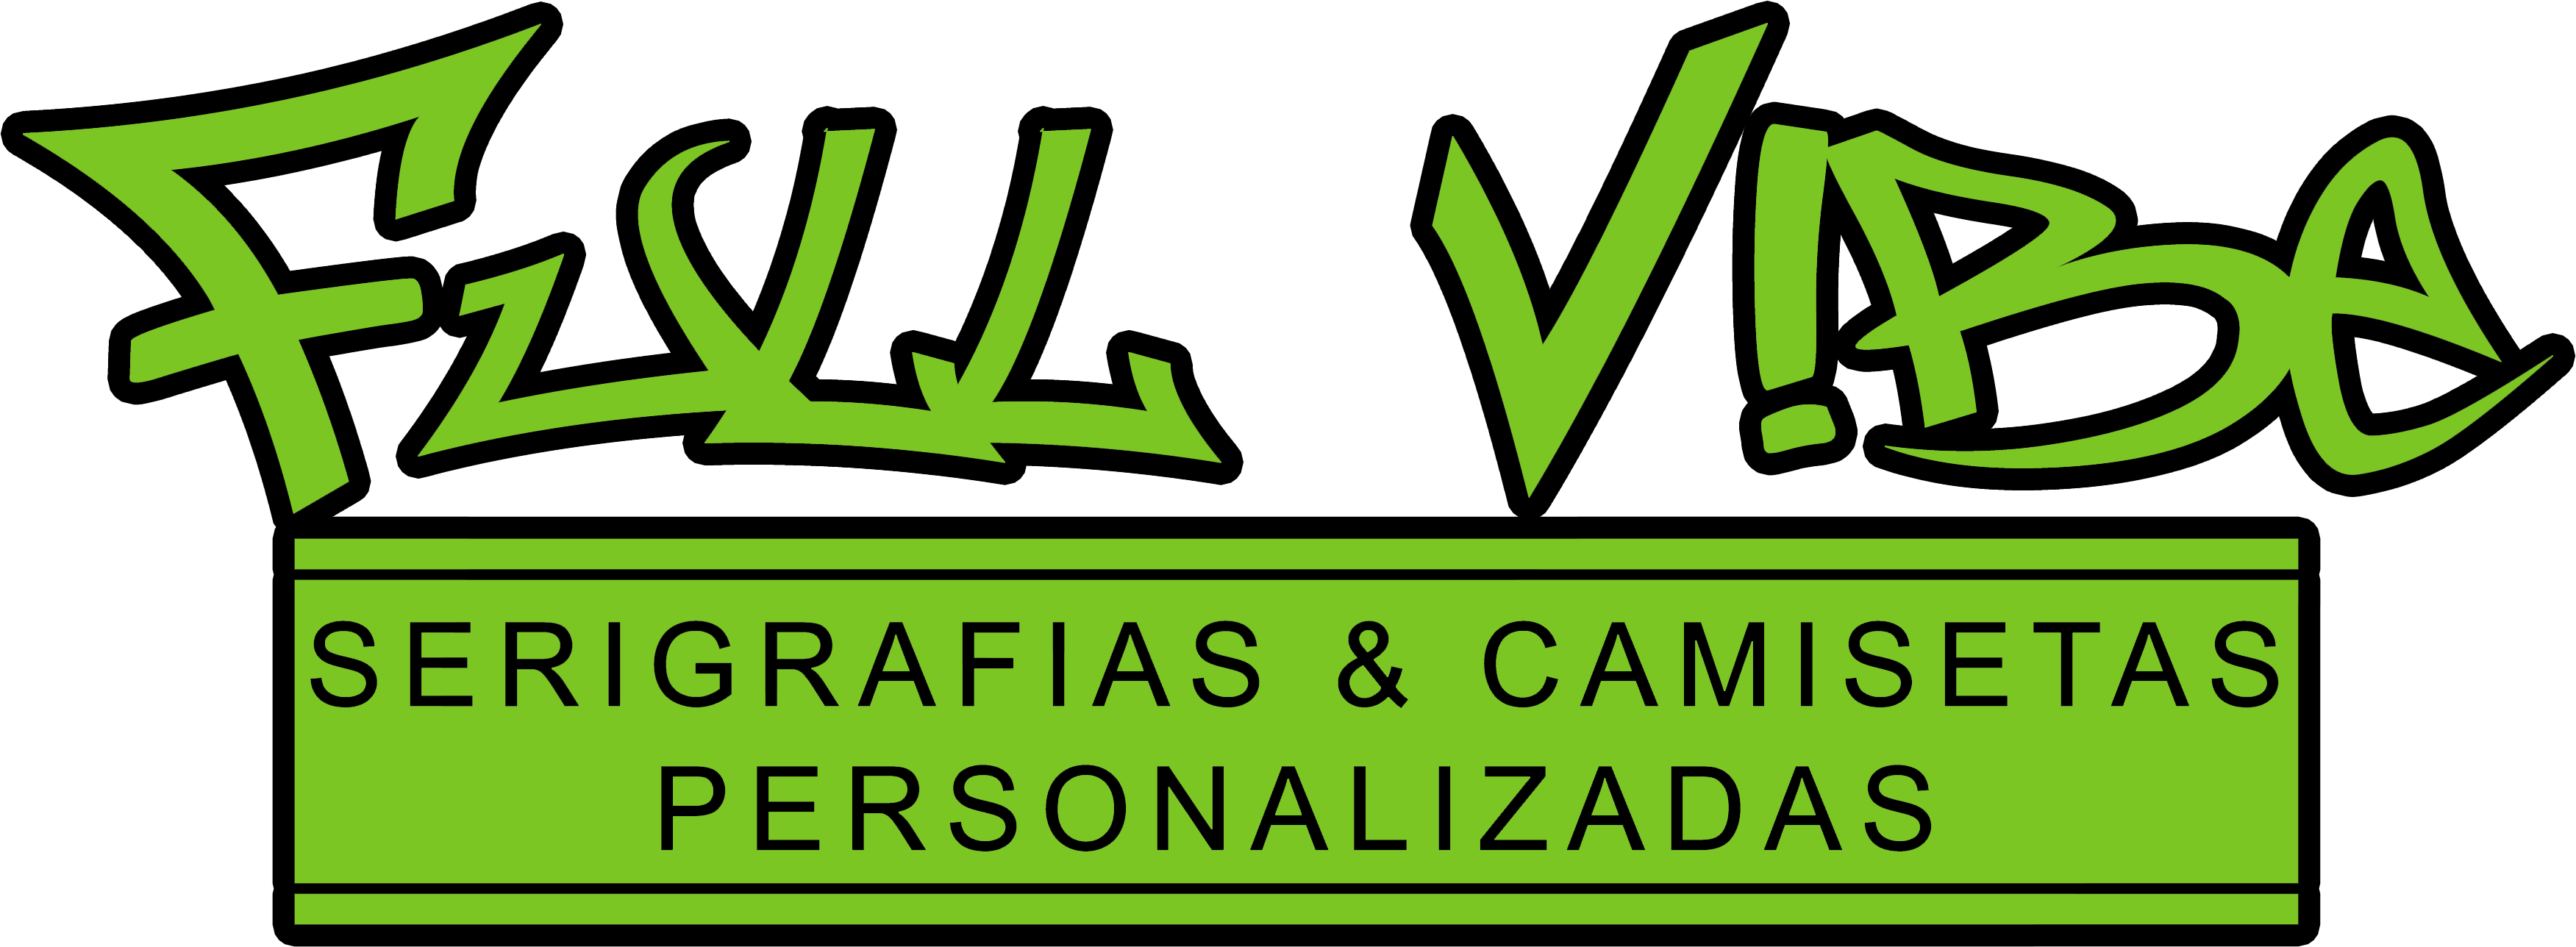 Full Vibe Serigrafias & Camisetas Personalizadas logo